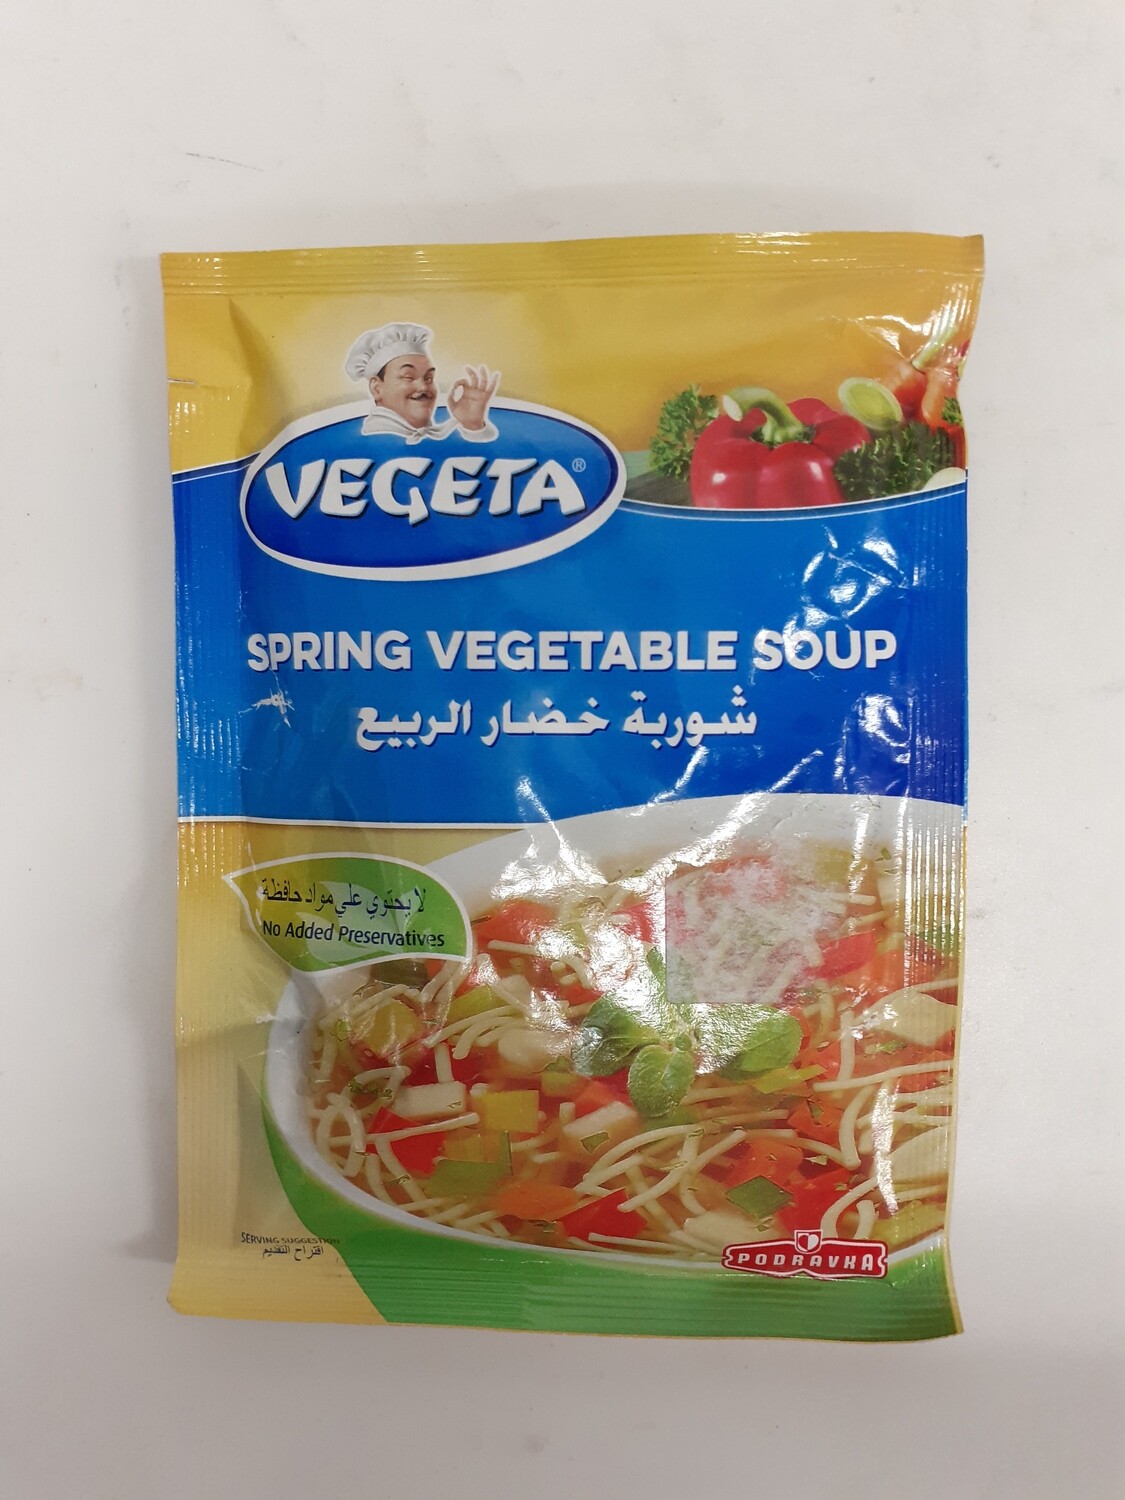 Spring Vegetable Soup VEGETA 60 g